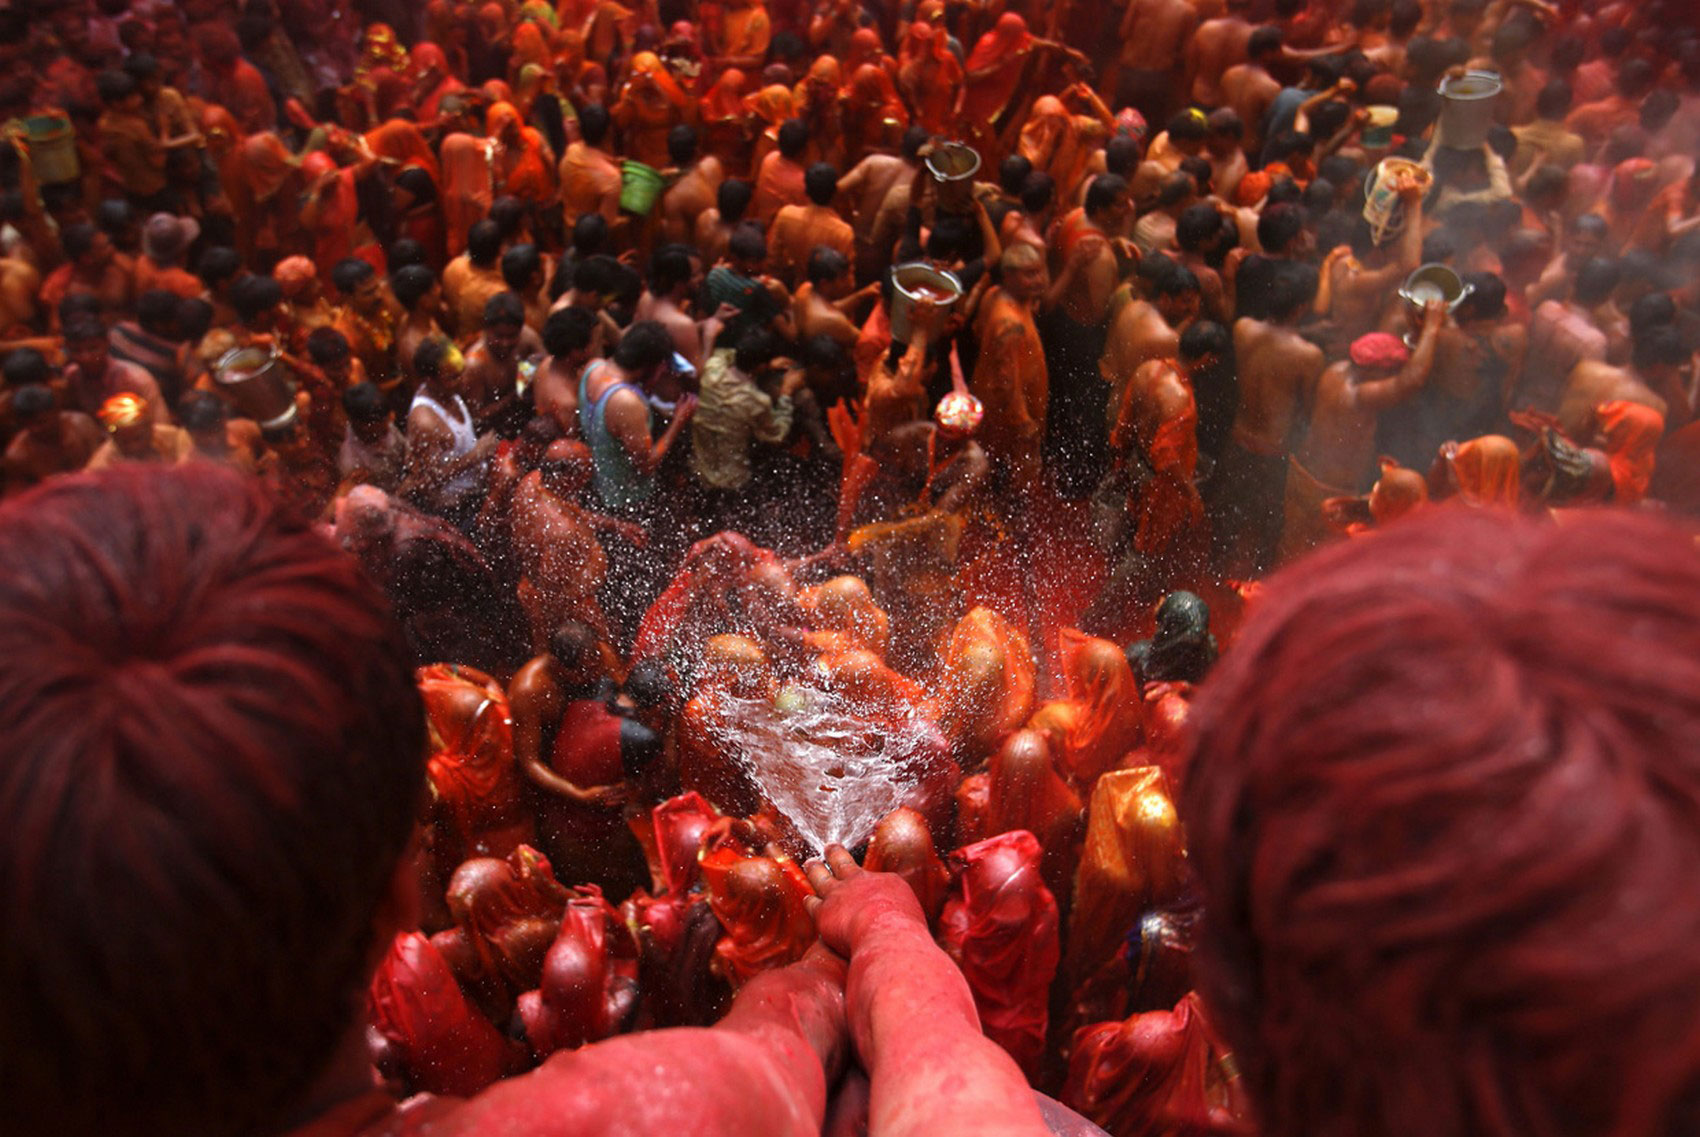 мужчины брызгают водой на толпу